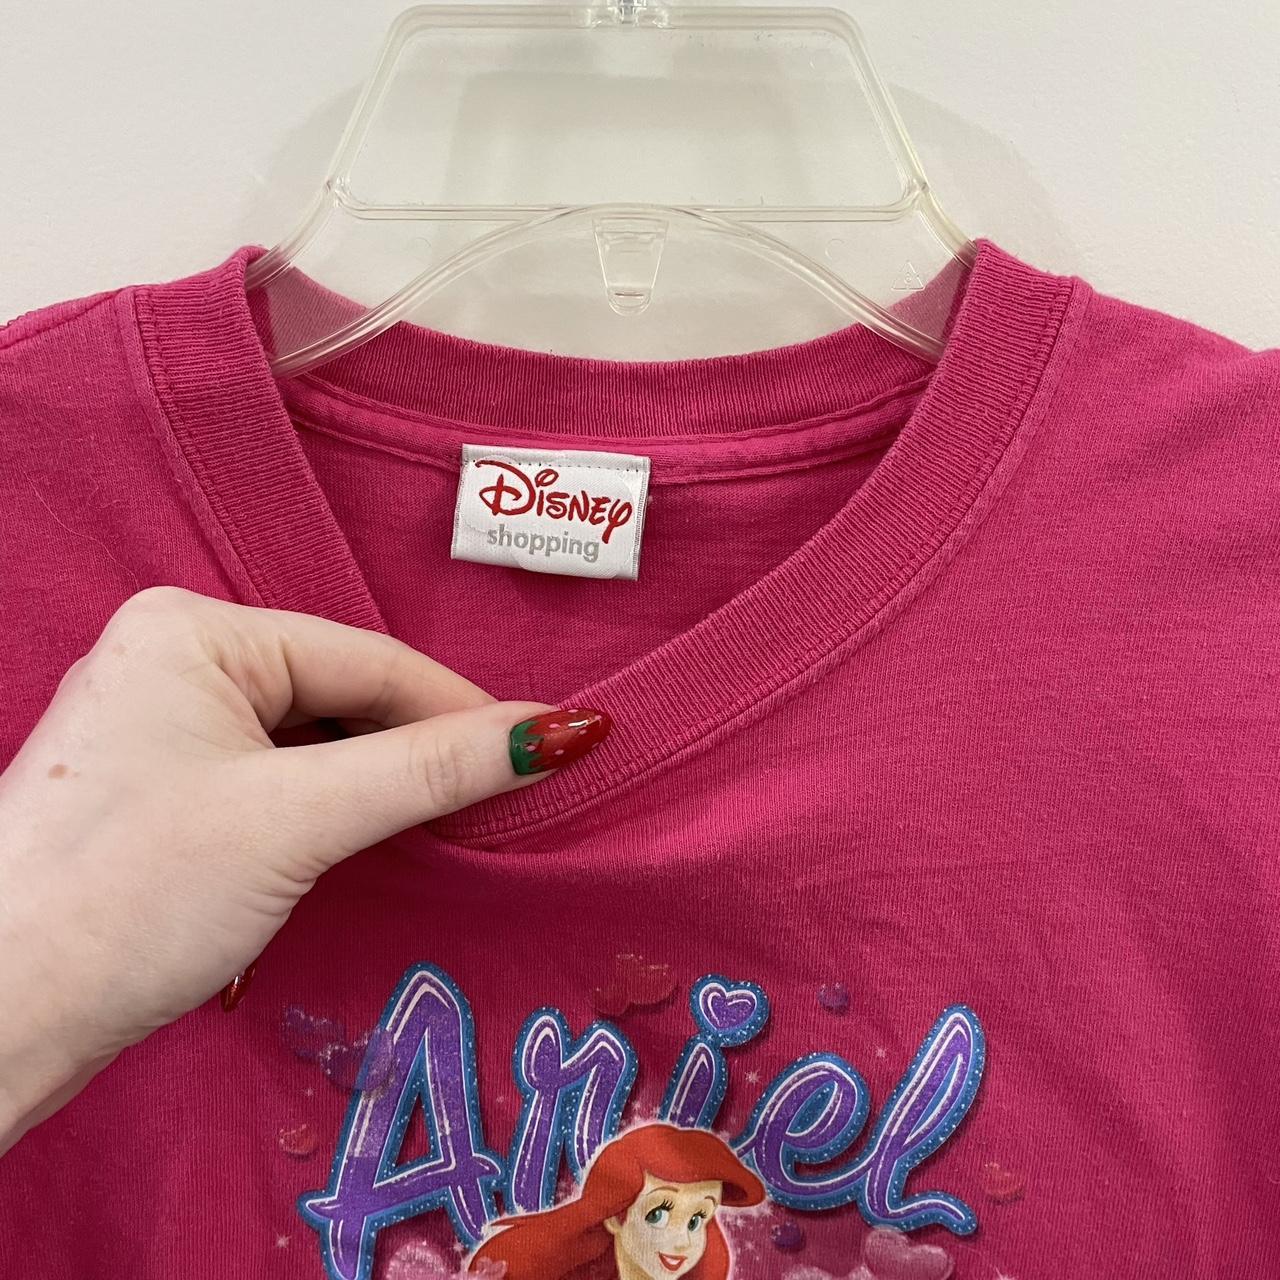 Hot pink Disney princess T-shirt featuring Ariel